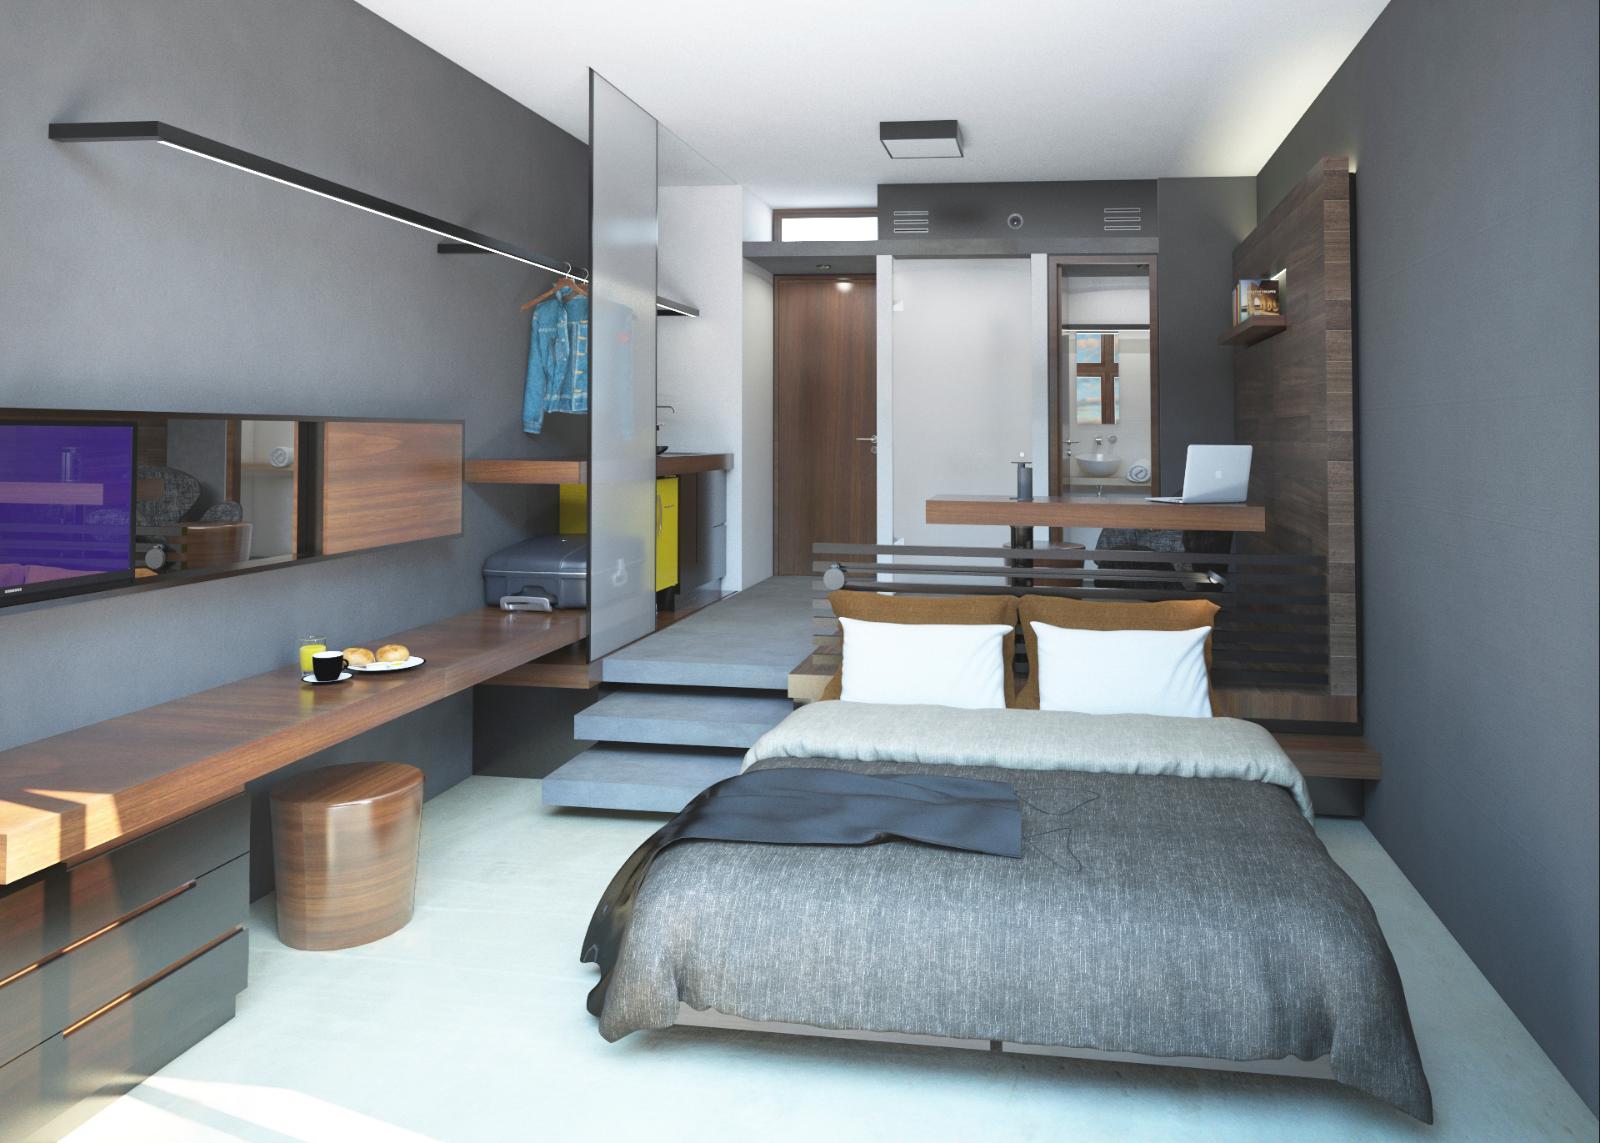 Polytropon_architects_hotel_interior_design_Room18_01